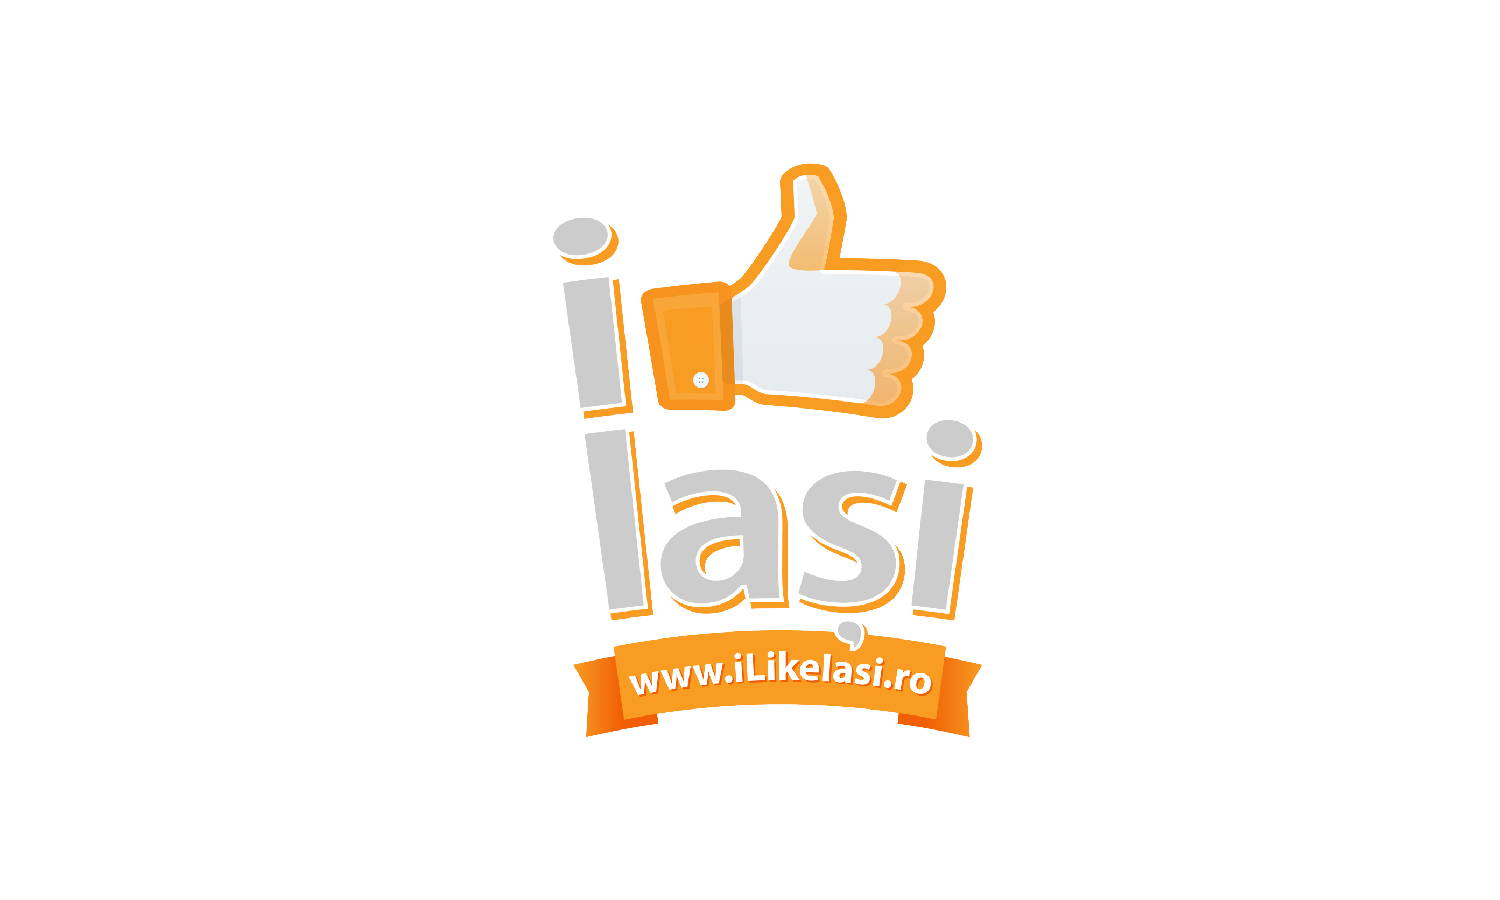 i like iasi